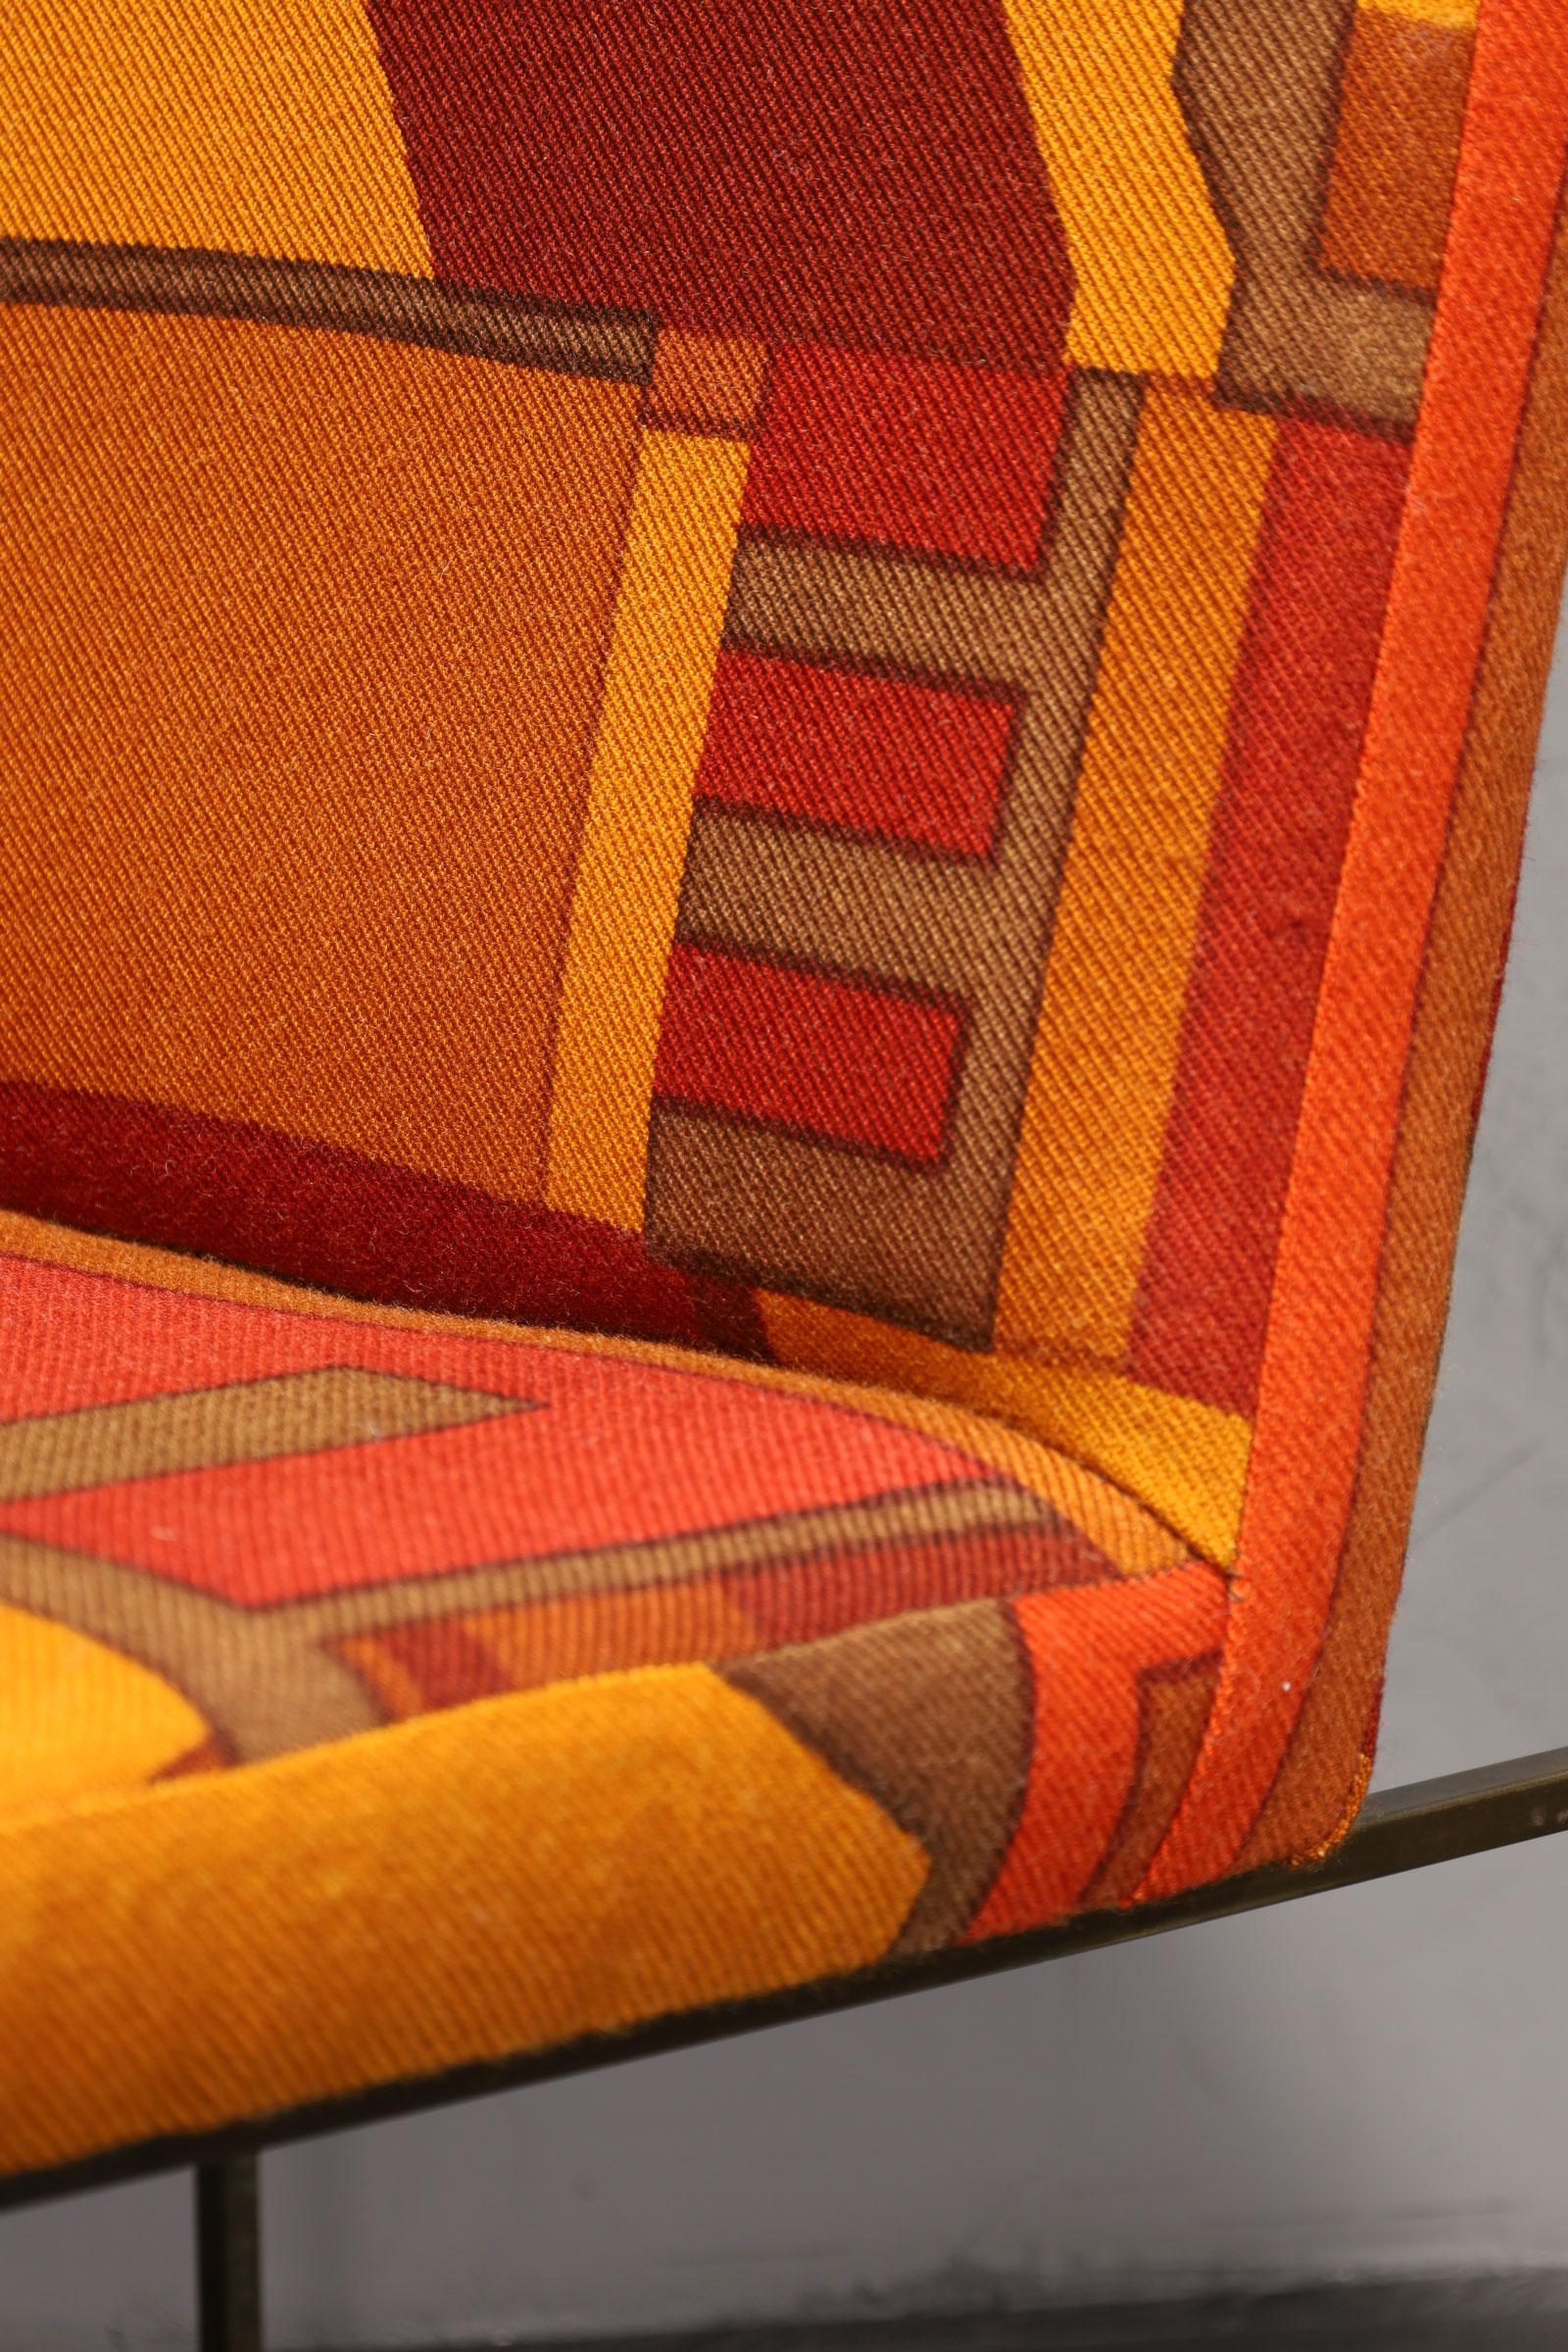 Milo Baughman Bronze Thin Frame Chairs in Jack Lenor Larsen Upholstery For Sale 1